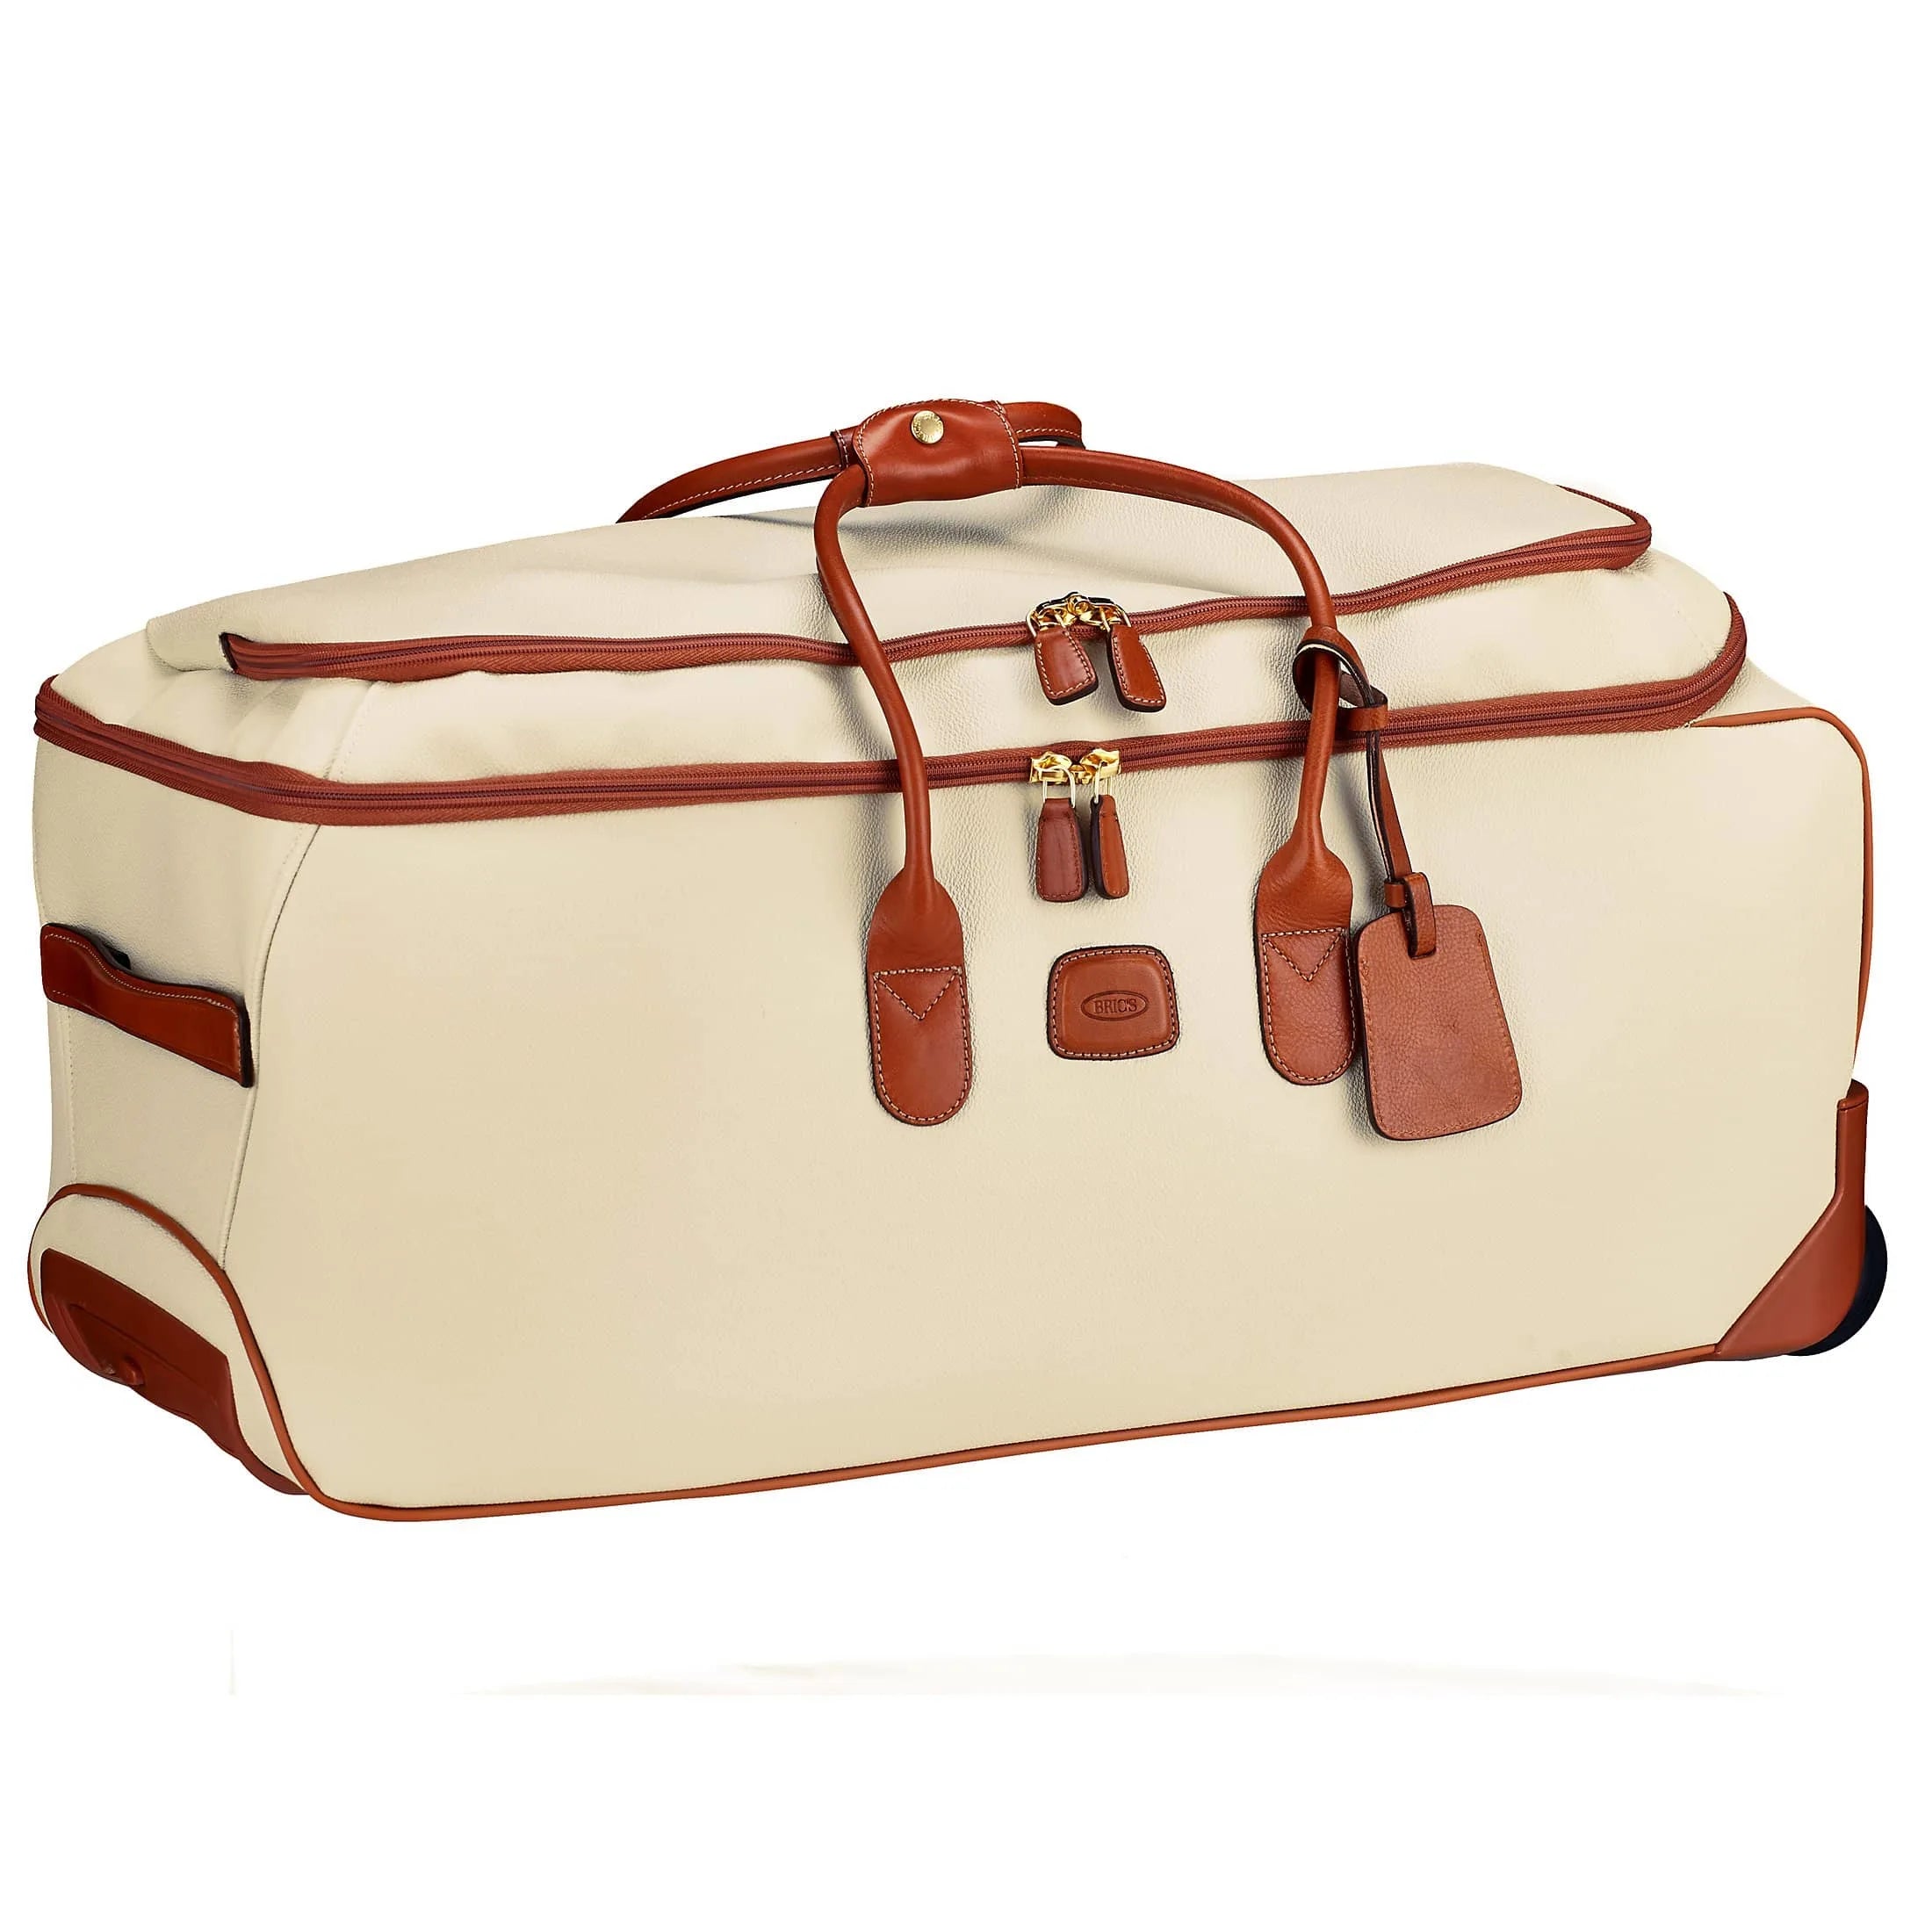 Brics Firenze travel bag on wheels 72 cm - cream